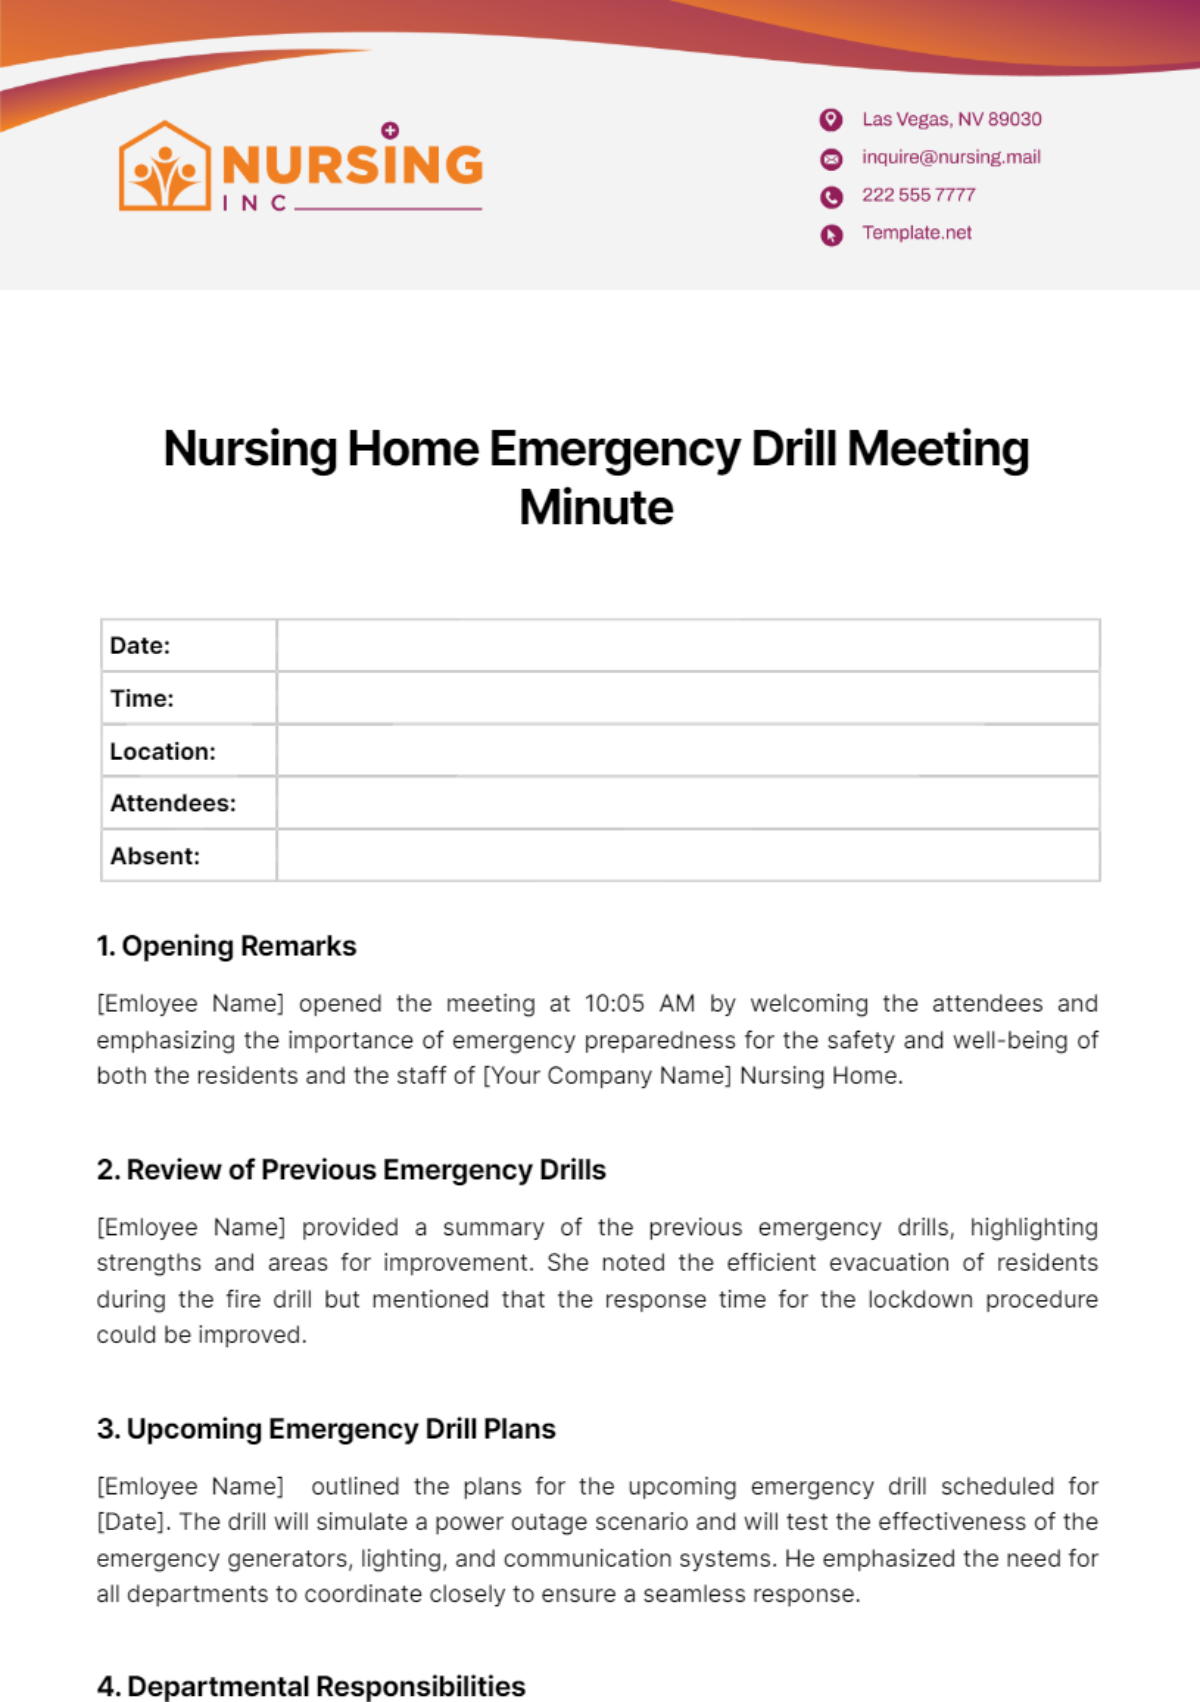 Nursing Home Emergency Drill Meeting Minute Template